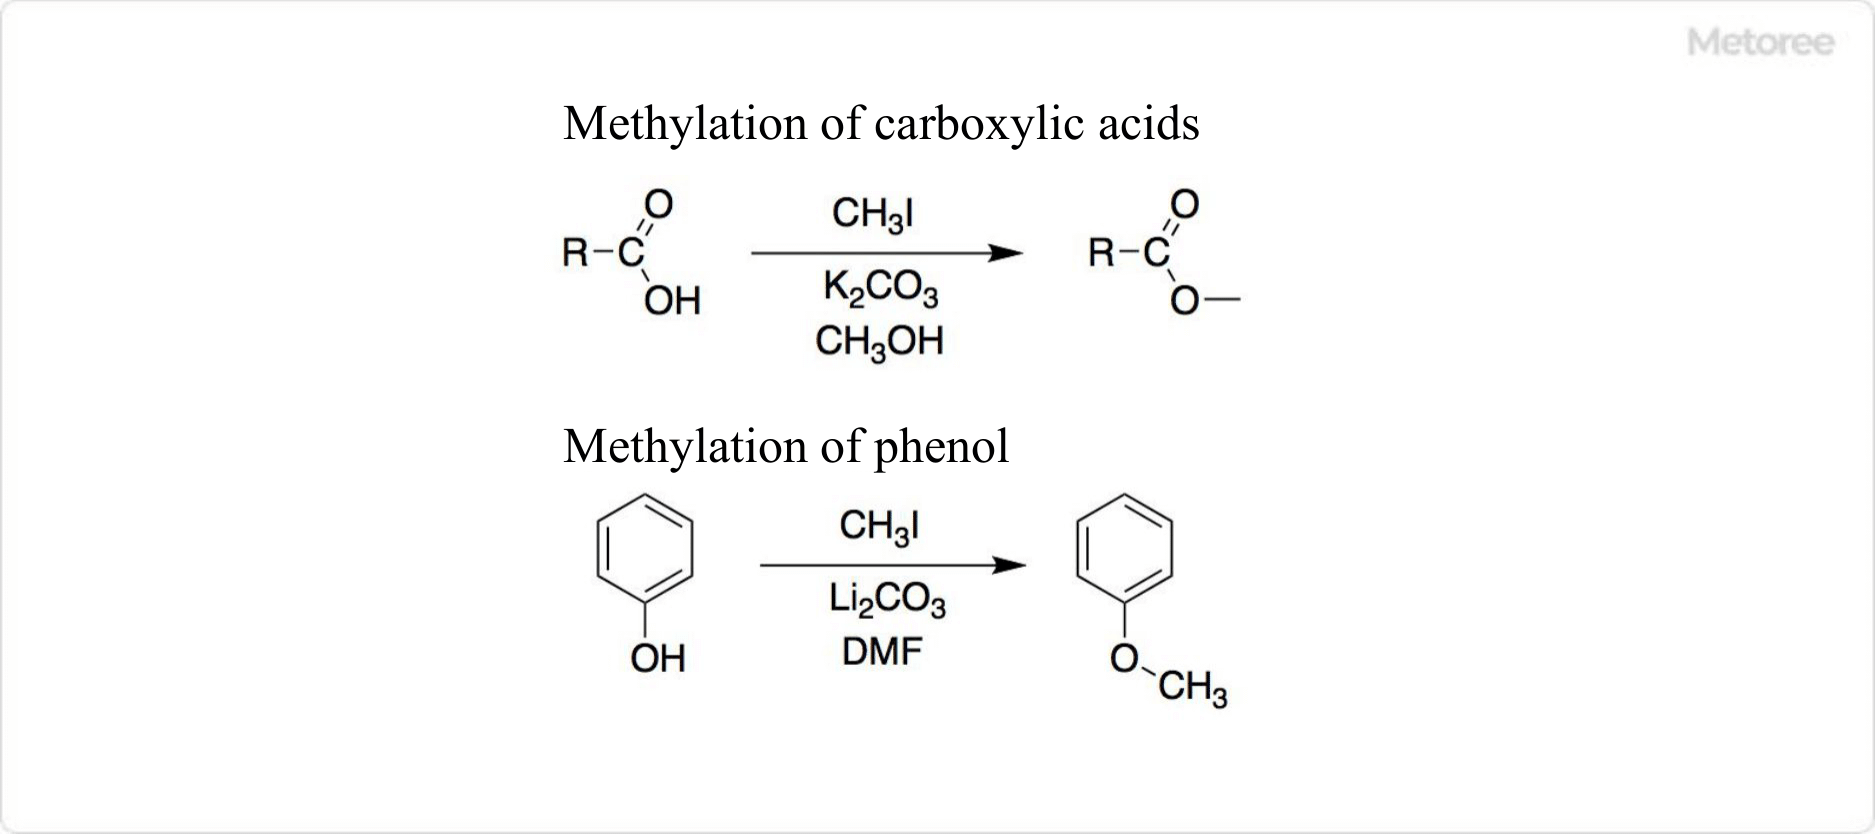 Figure 2. Reaction using methyl iodide